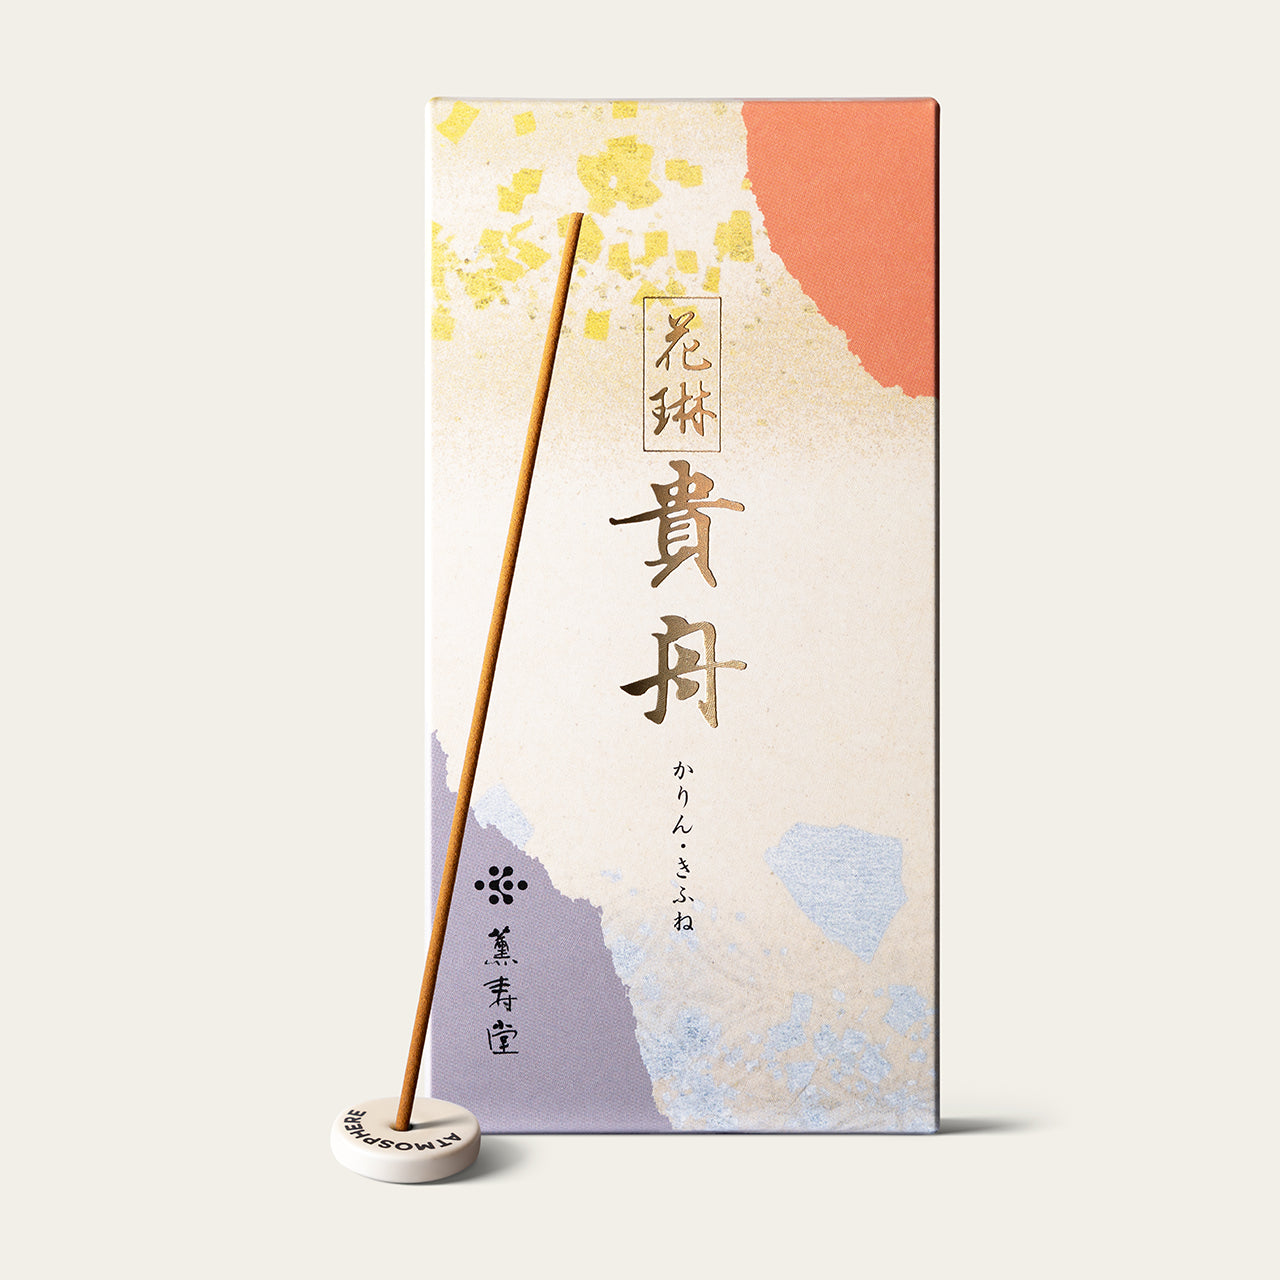 Kunjudo Royal Ship Karin Kifune Japanese incense sticks (220 sticks) with Atmosphere ceramic incense holder